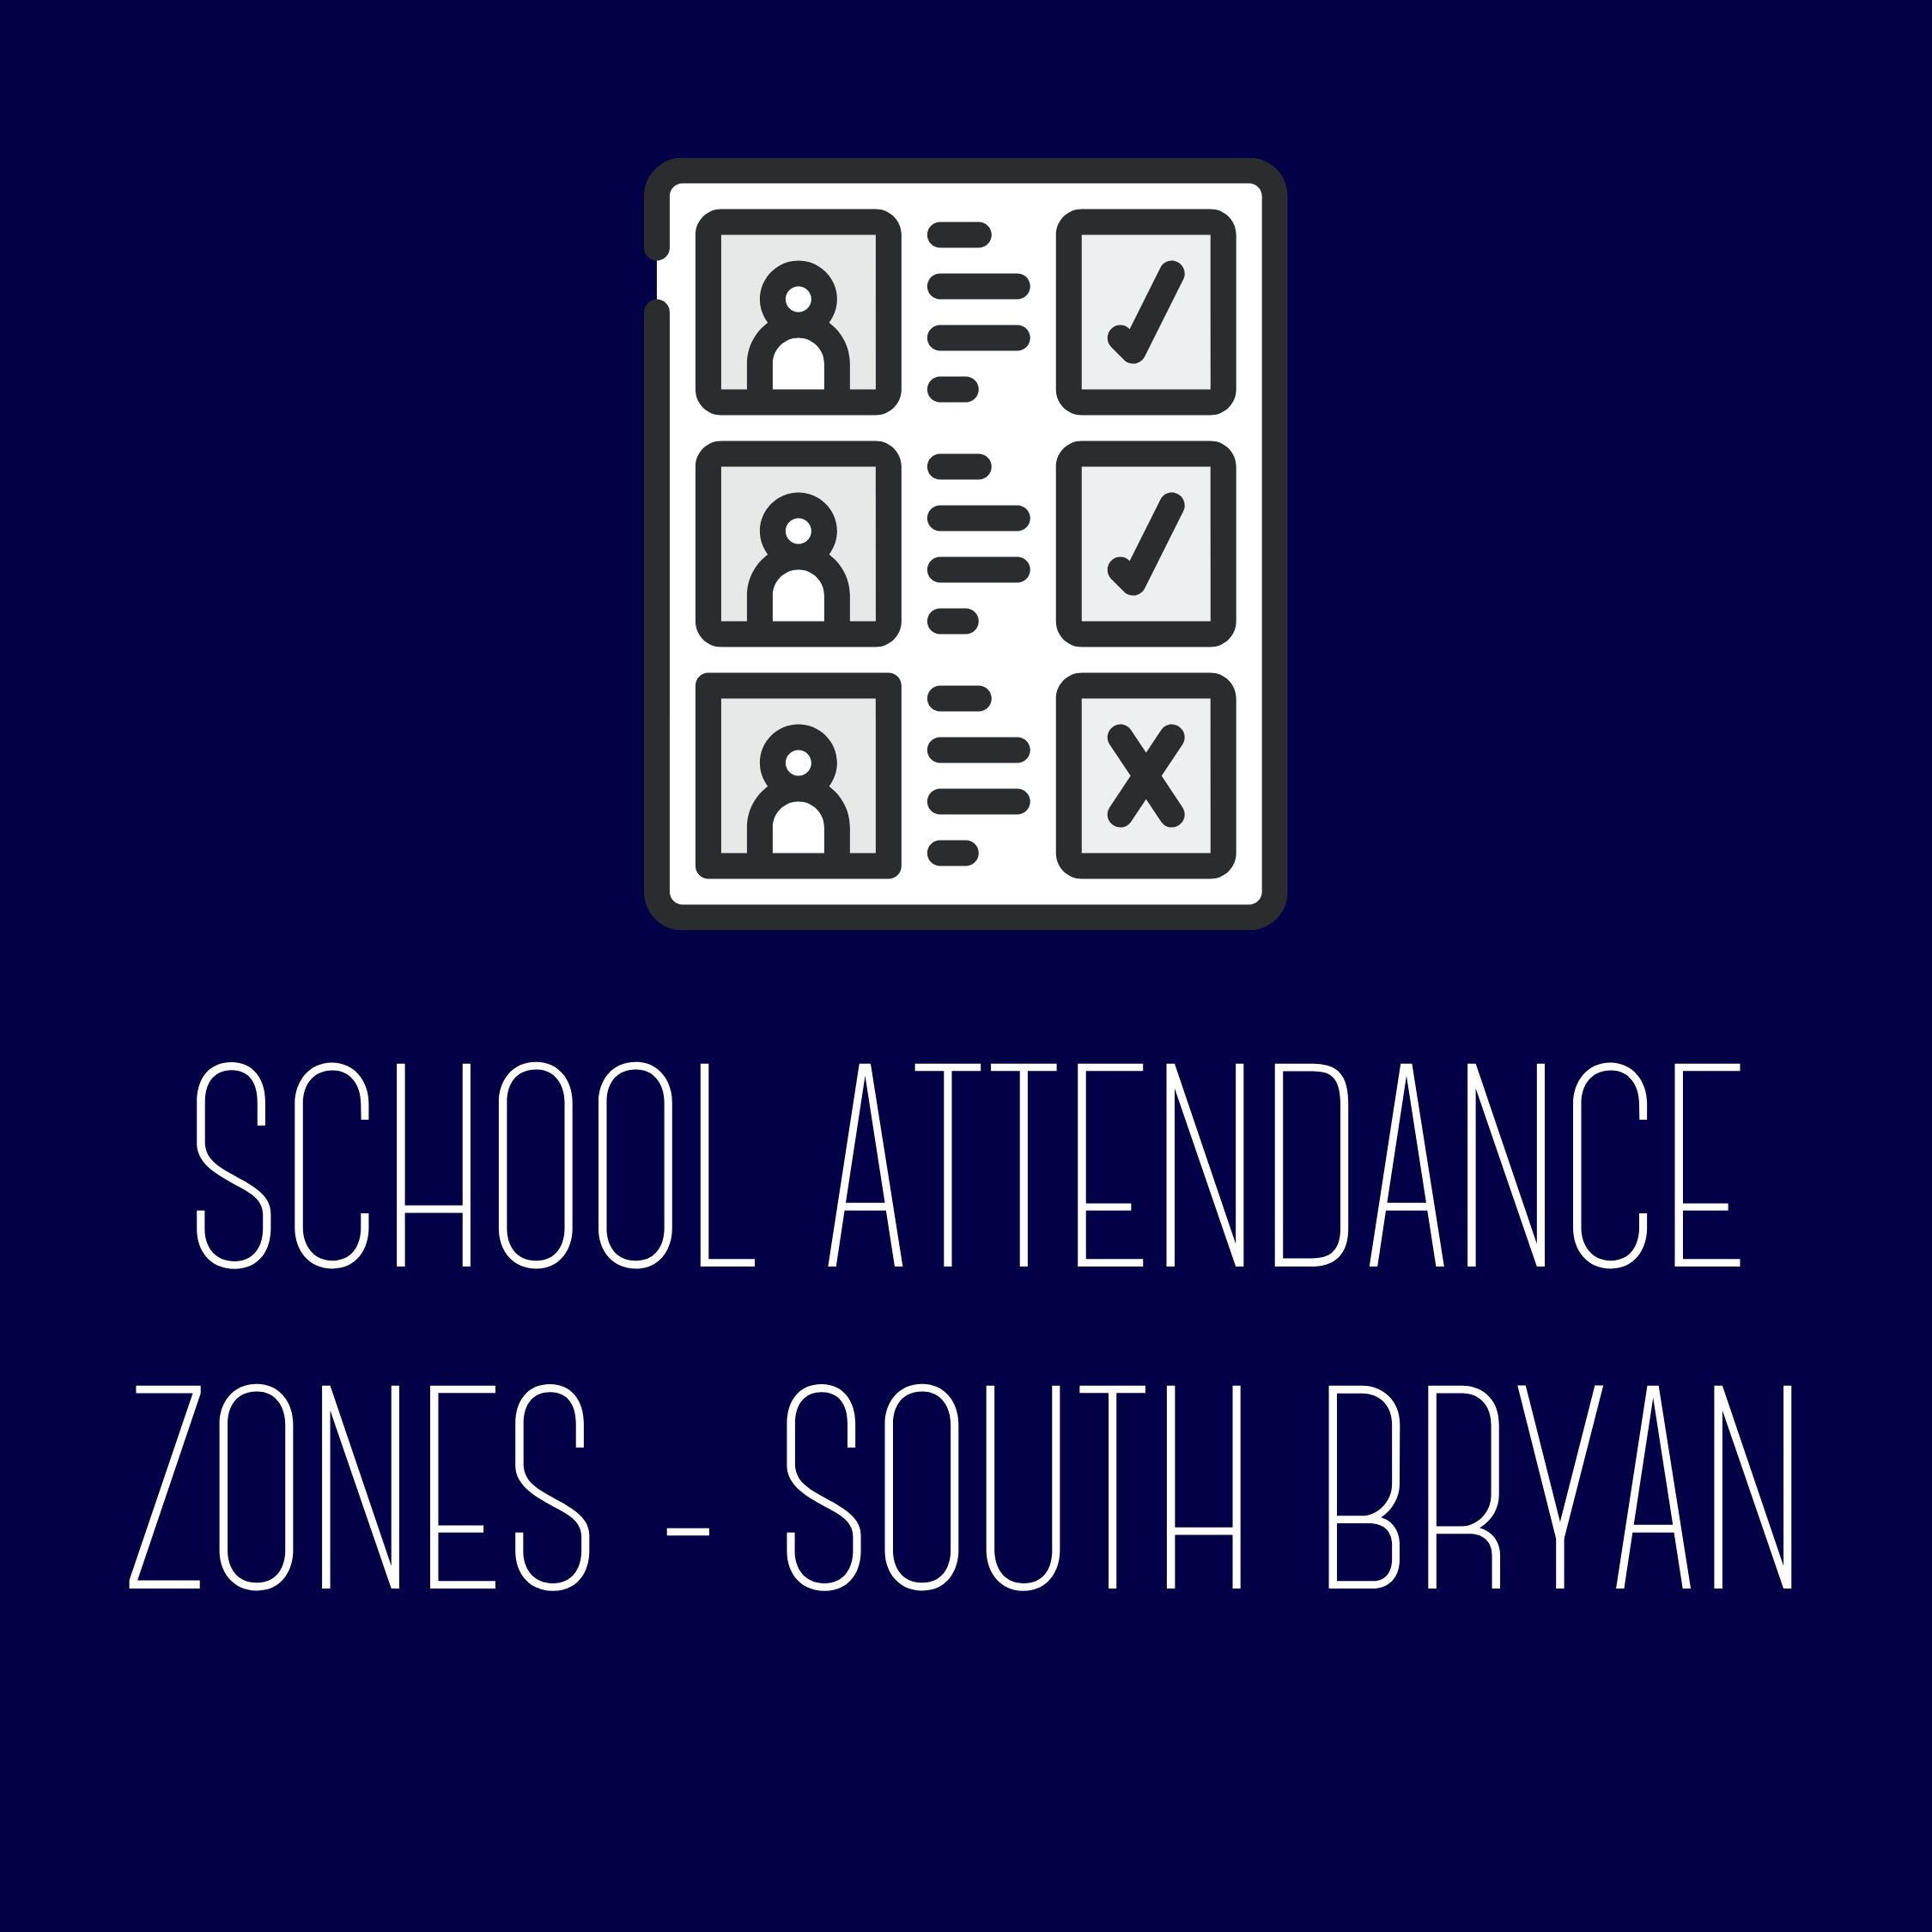 School Attendance Zones - South Bryan